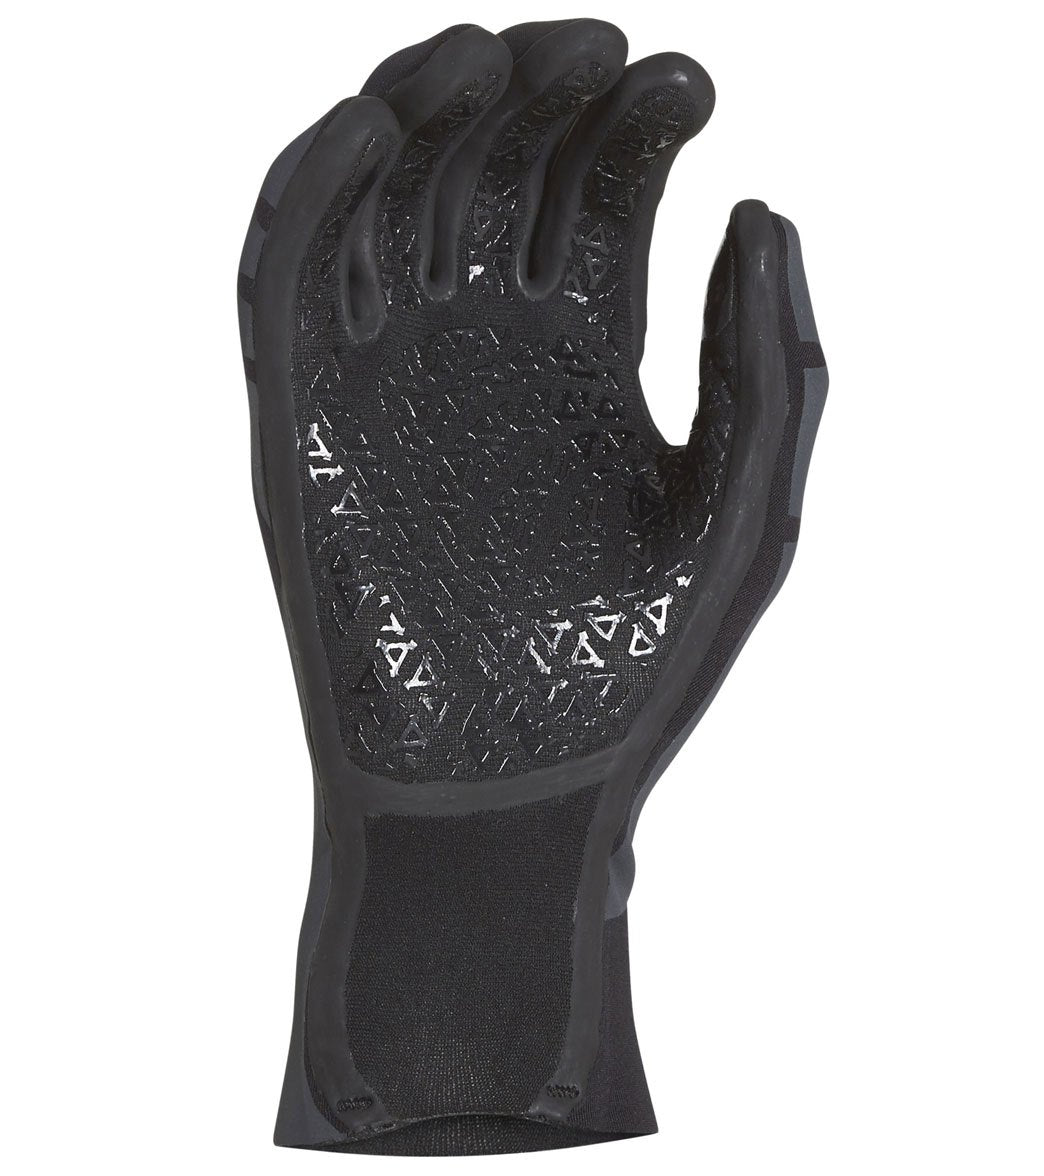 Xcel Infiniti 1.5mm 5 Finger Thermolite Glove